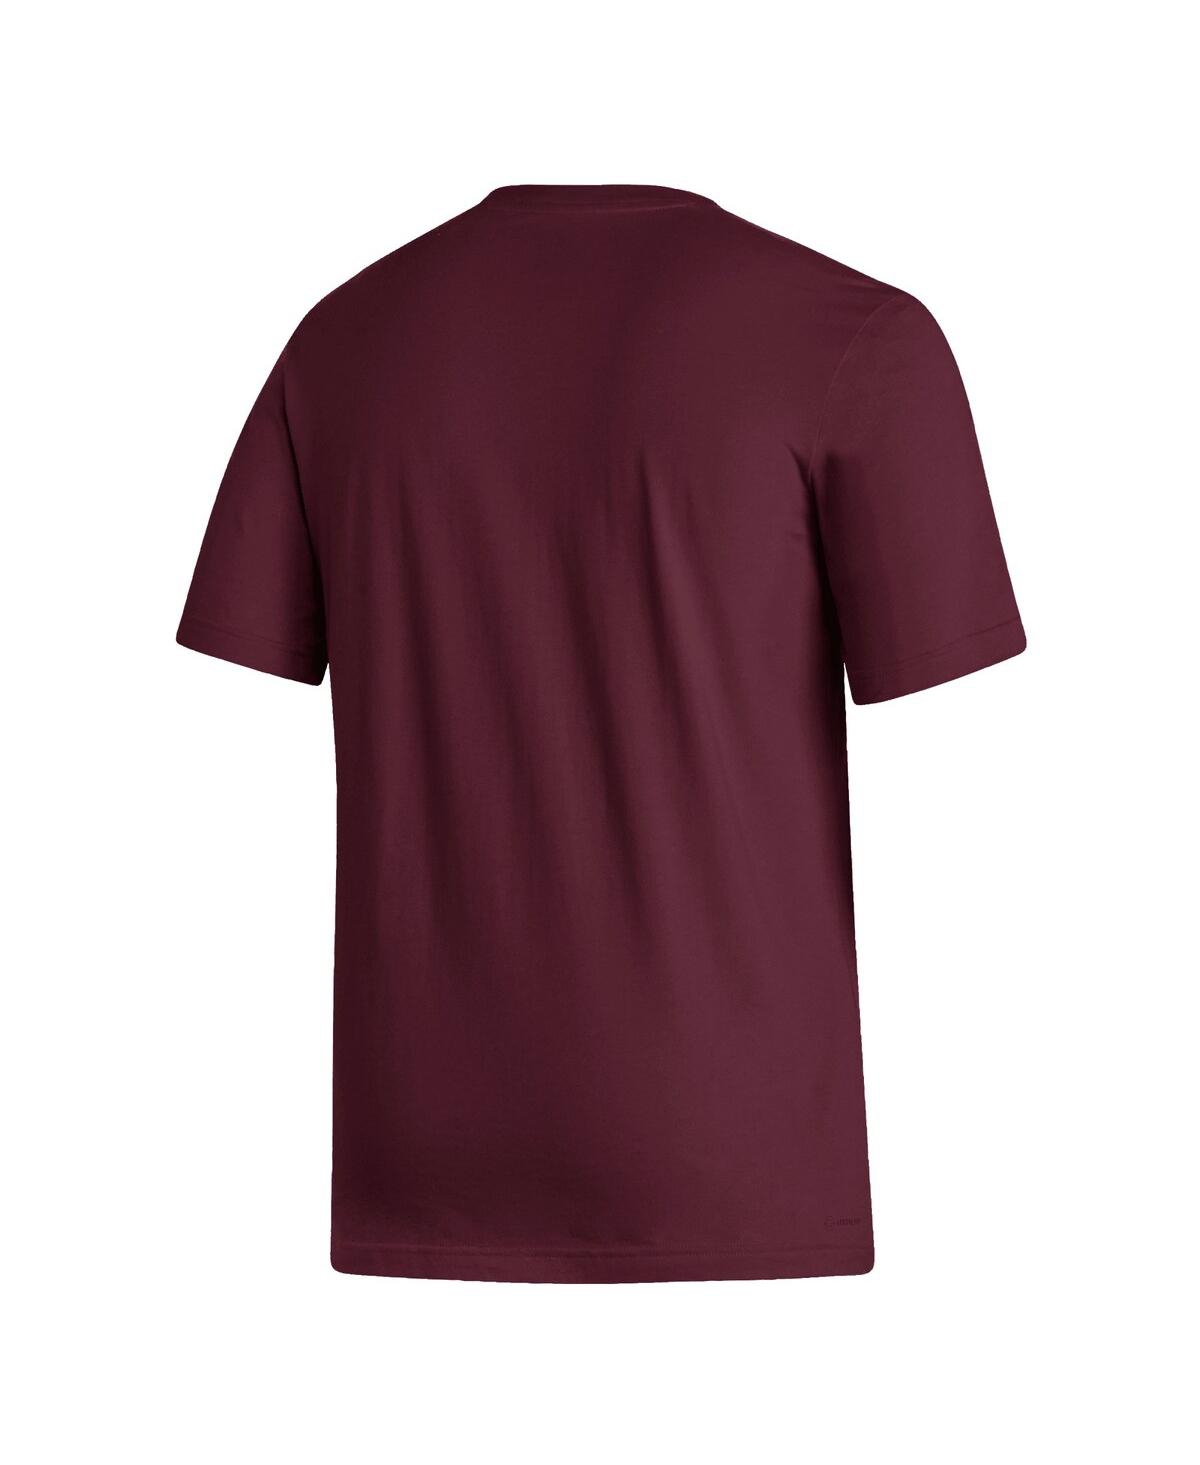 Shop Adidas Originals Men's Adidas Maroon Arizona State Sun Devils Locker Lines Softball Fresh T-shirt